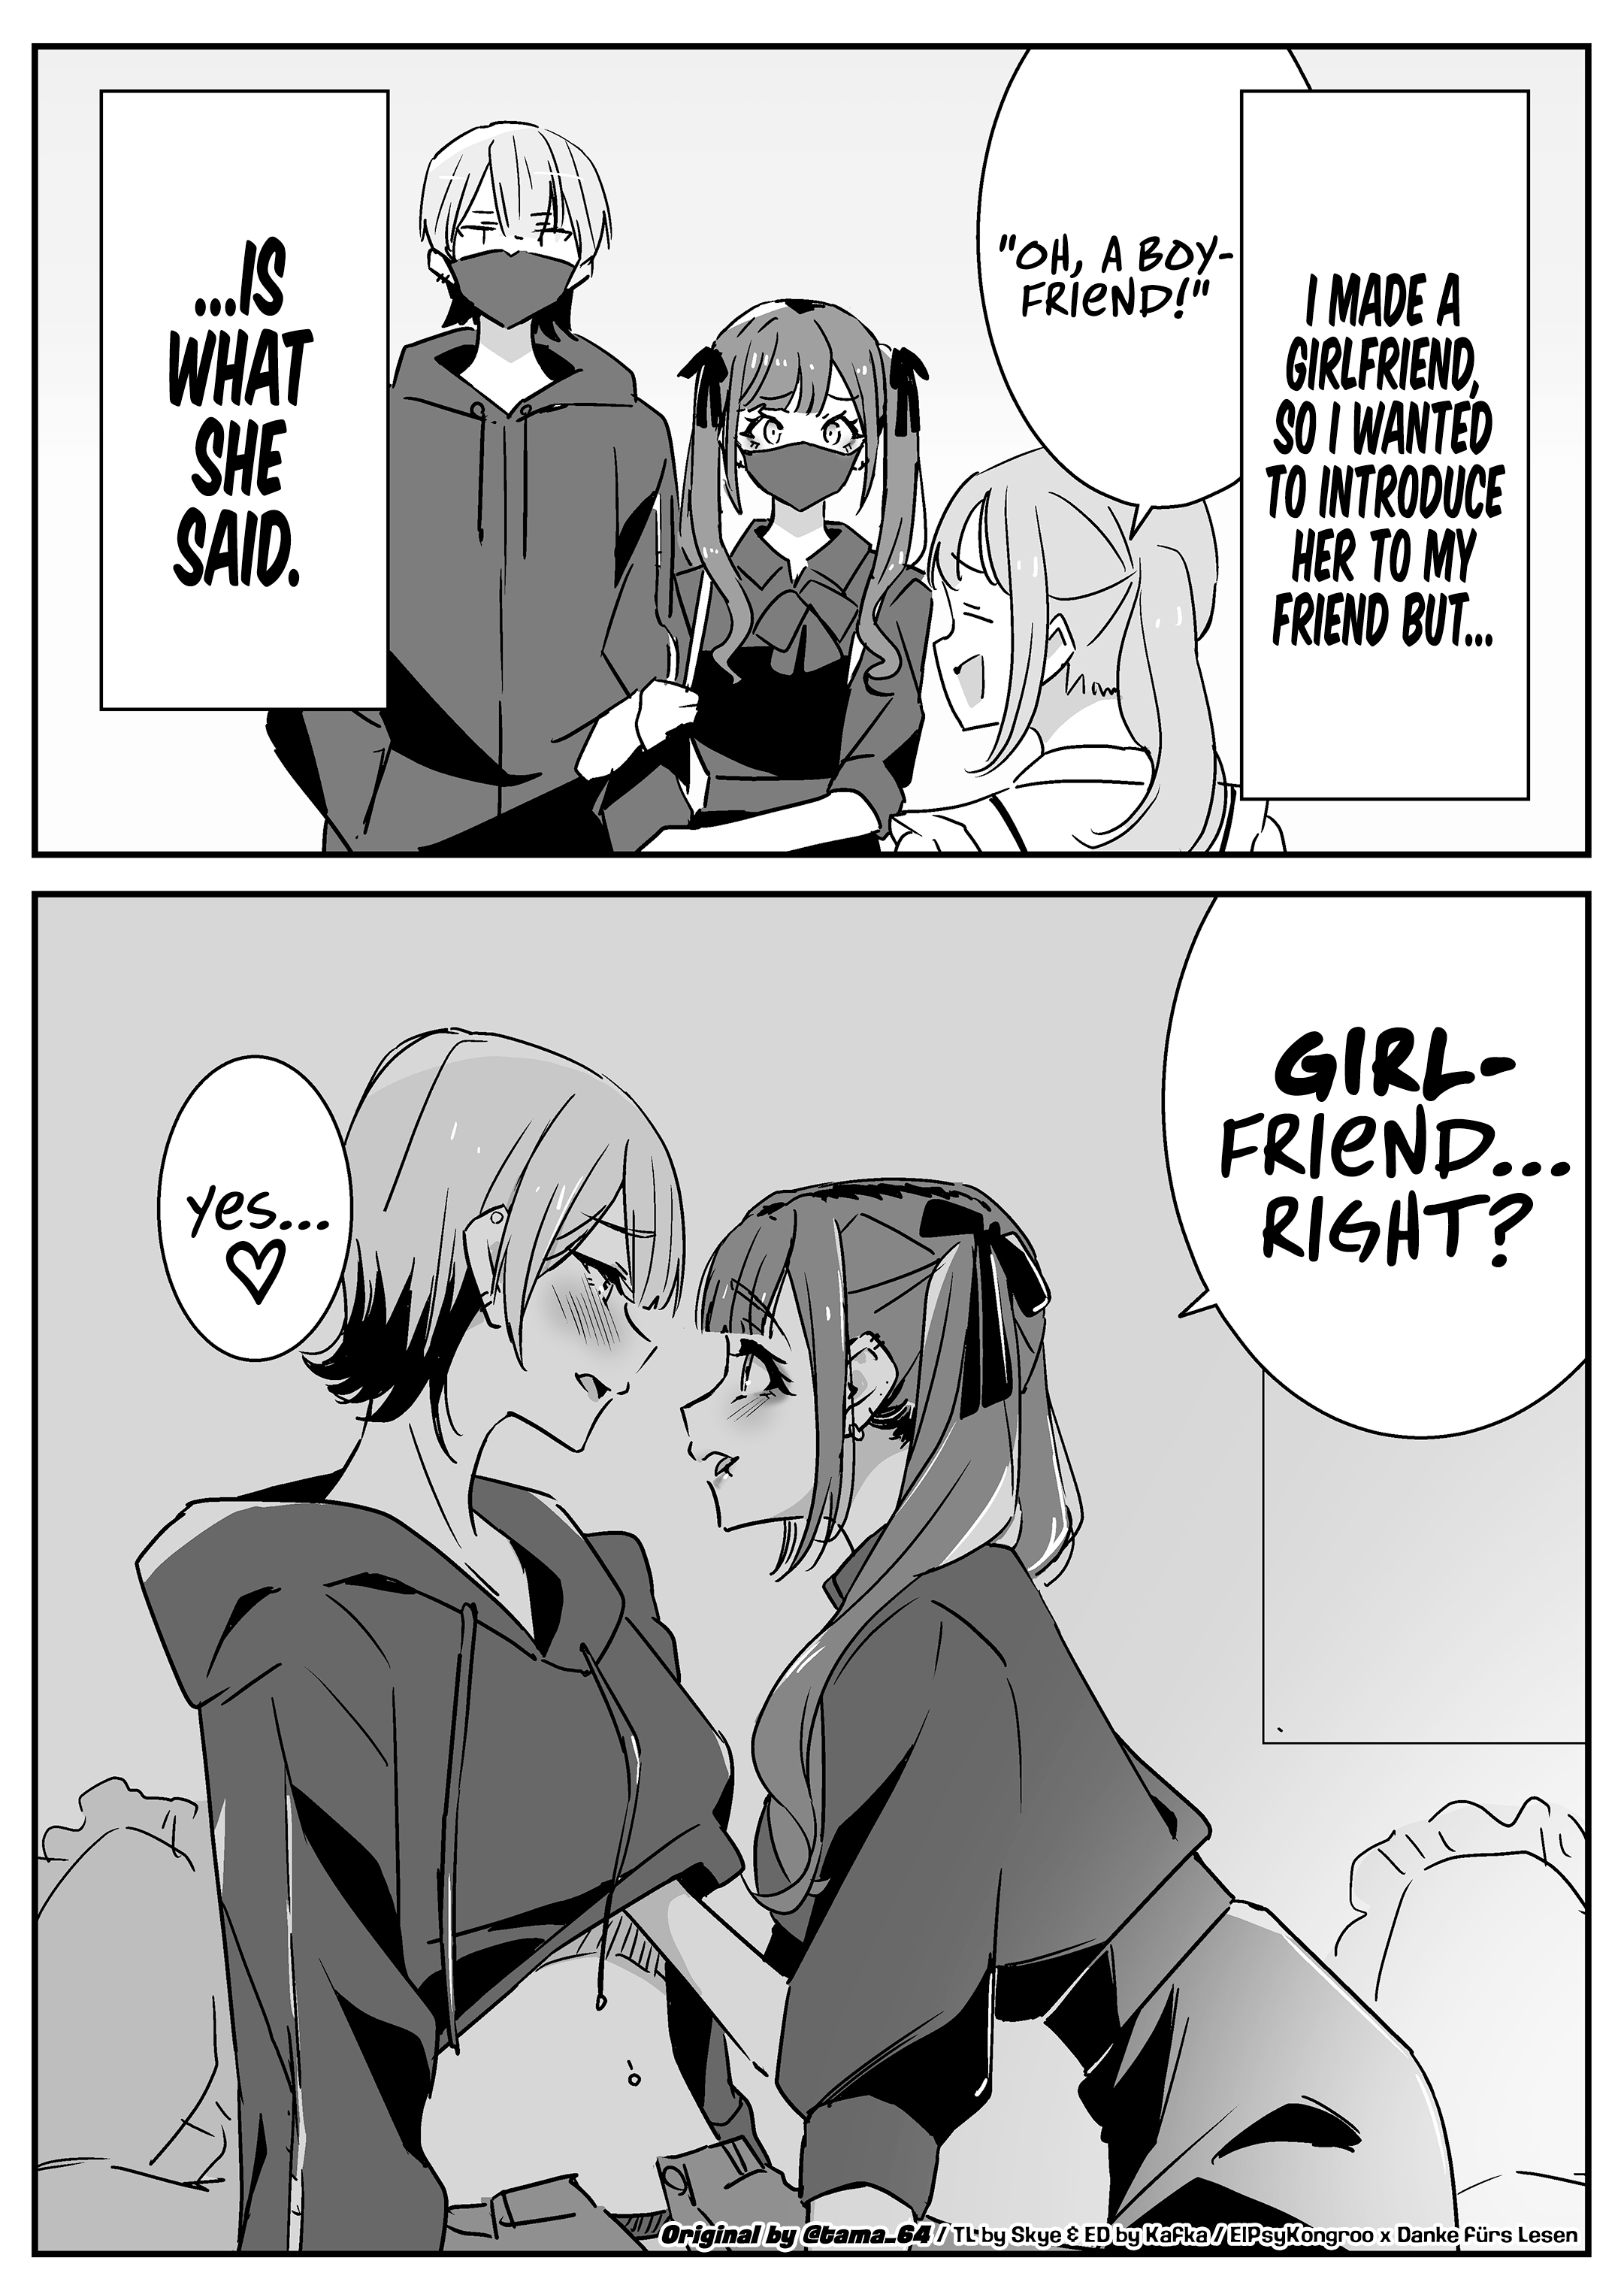 Girlfriend manga